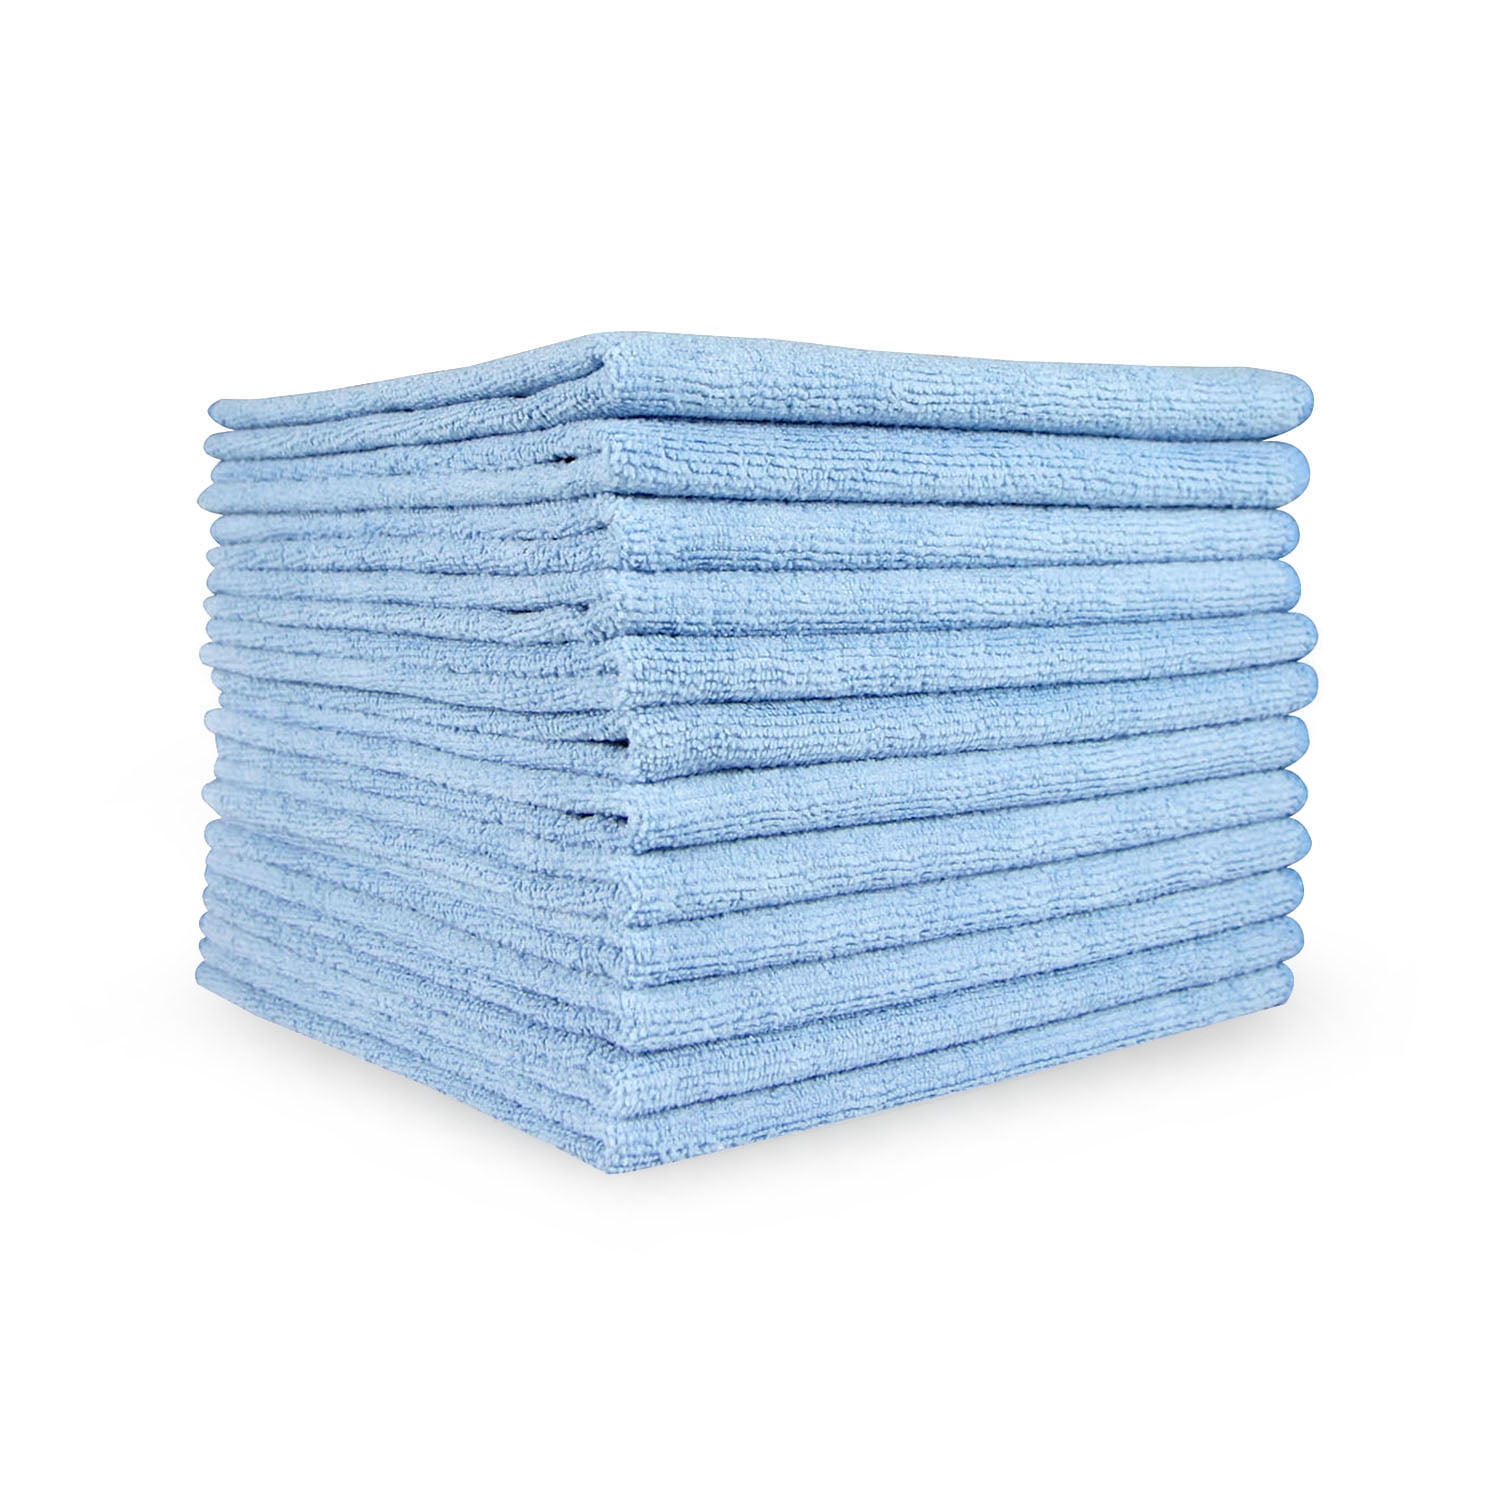 12 BLUE Microfiber Towels Super Soft Plush Cleaning Cloth 16x16 Ultra Absorbent 